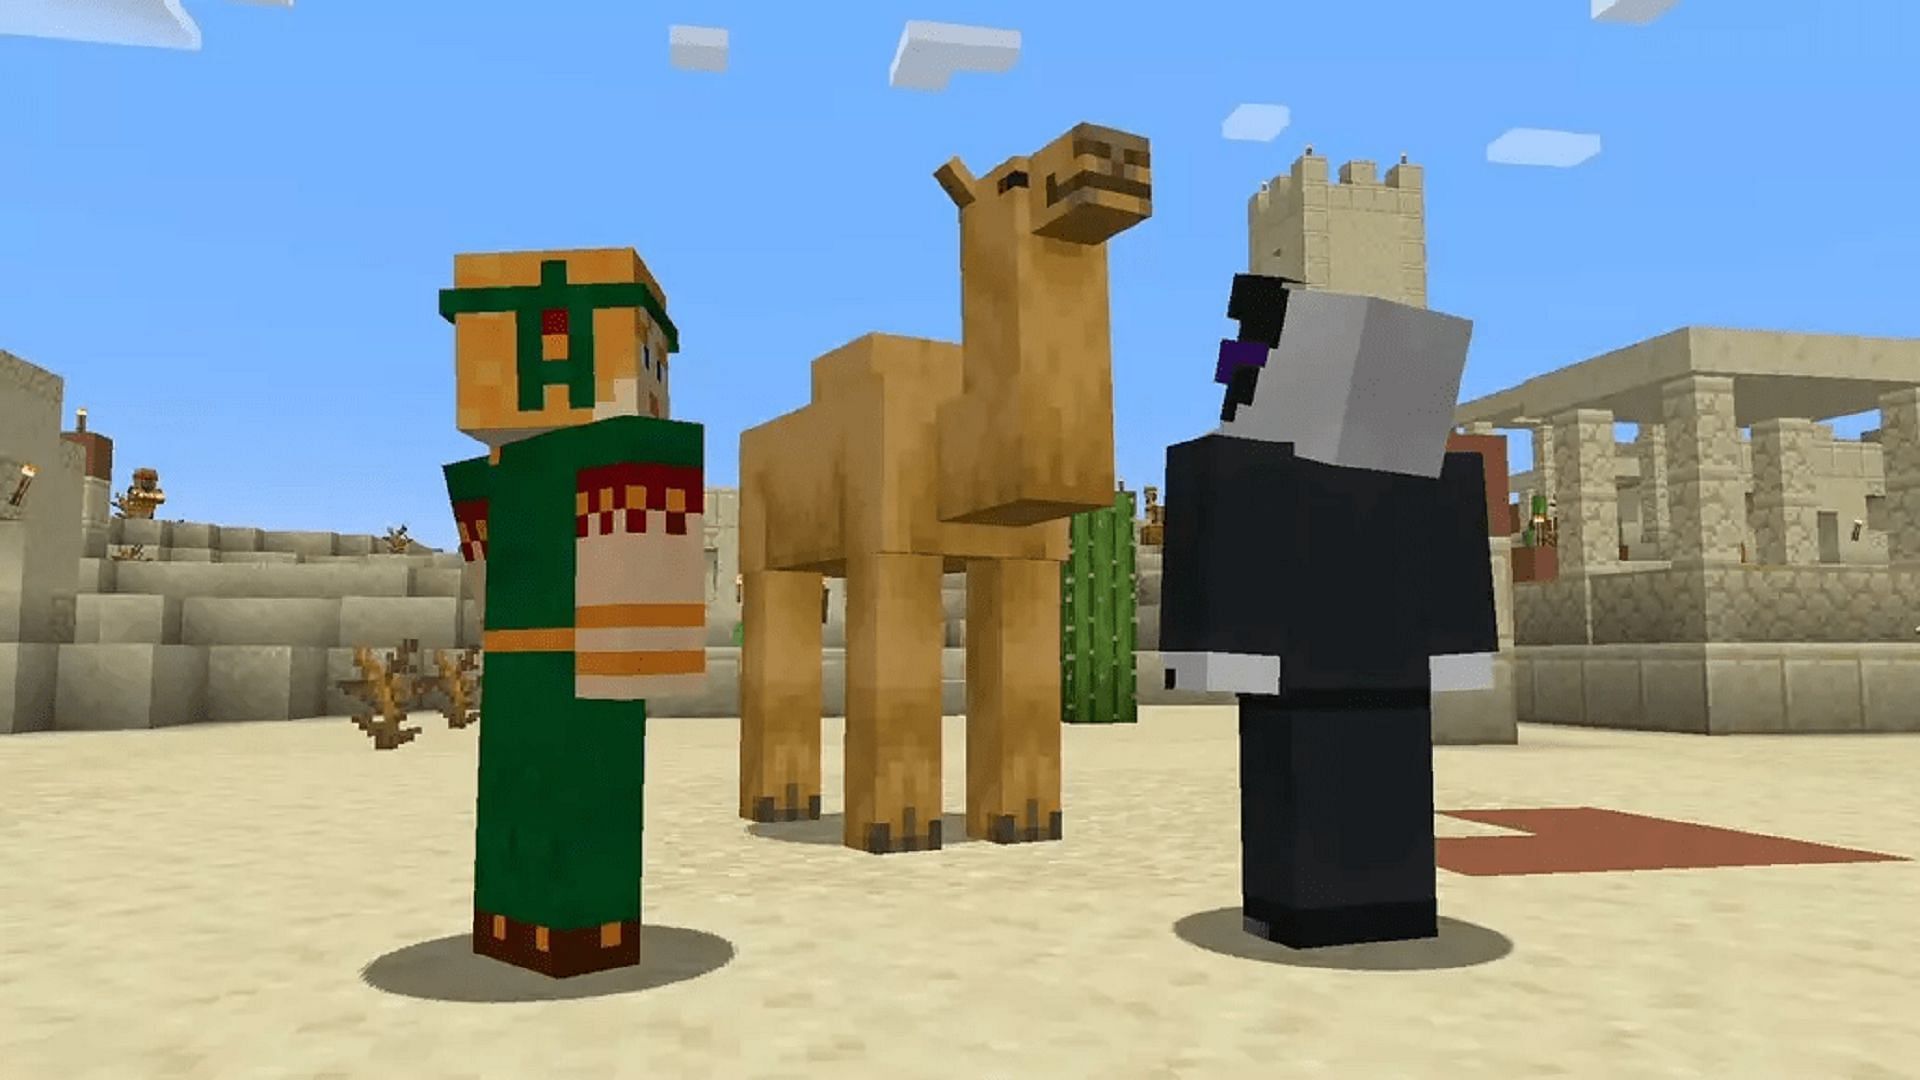 Players encounter a camel in a desert village (Image via Mojang)